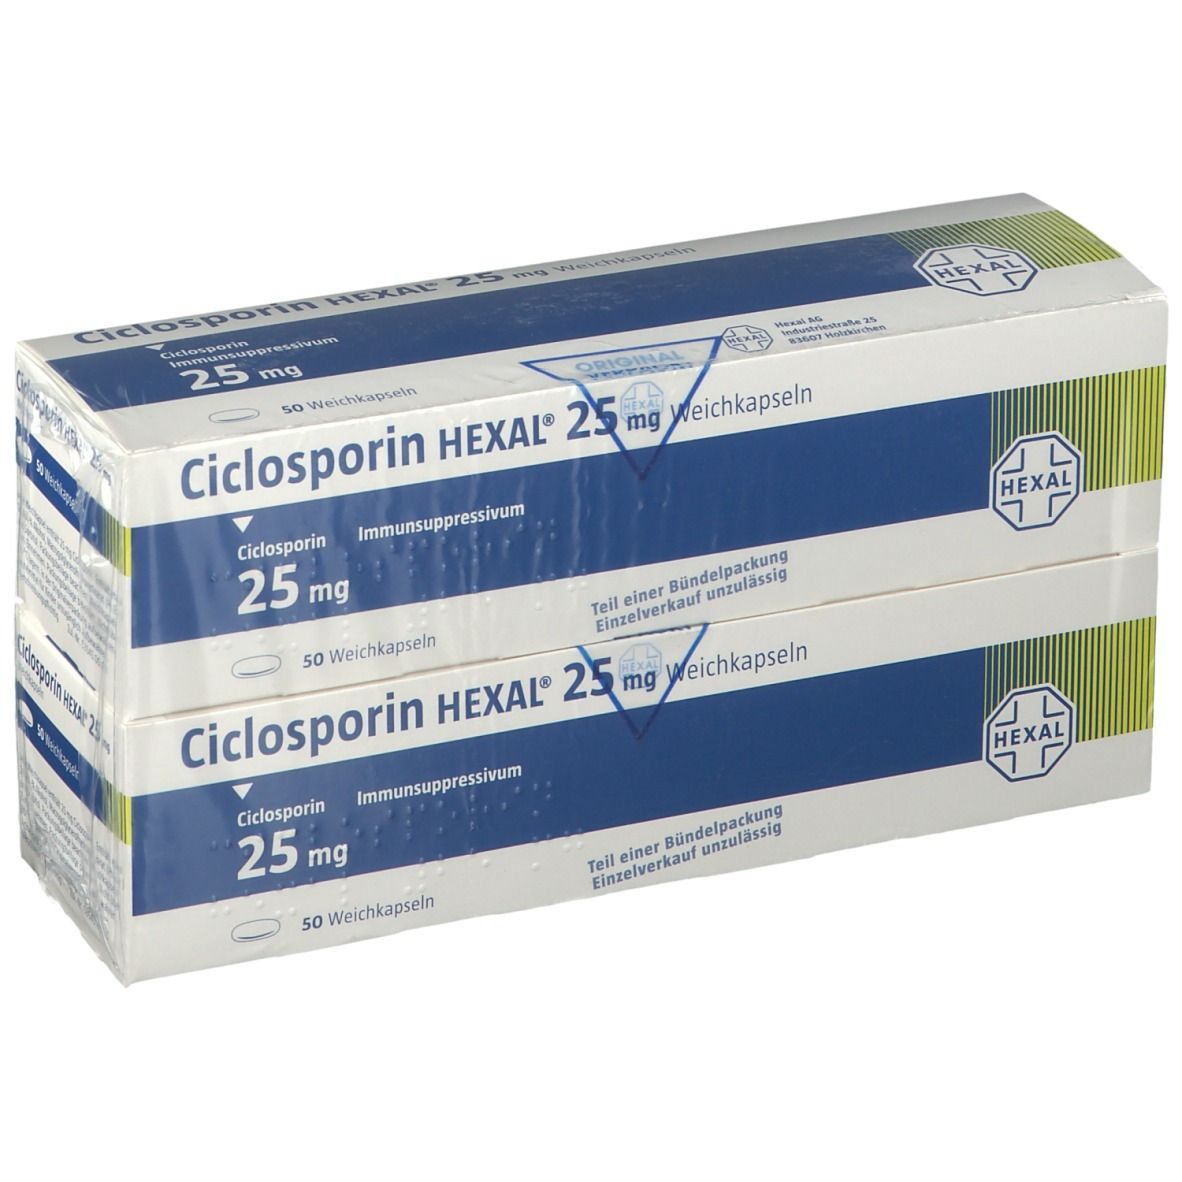 Ciclosporin HEXAL® 25 St - shop-apotheke.com